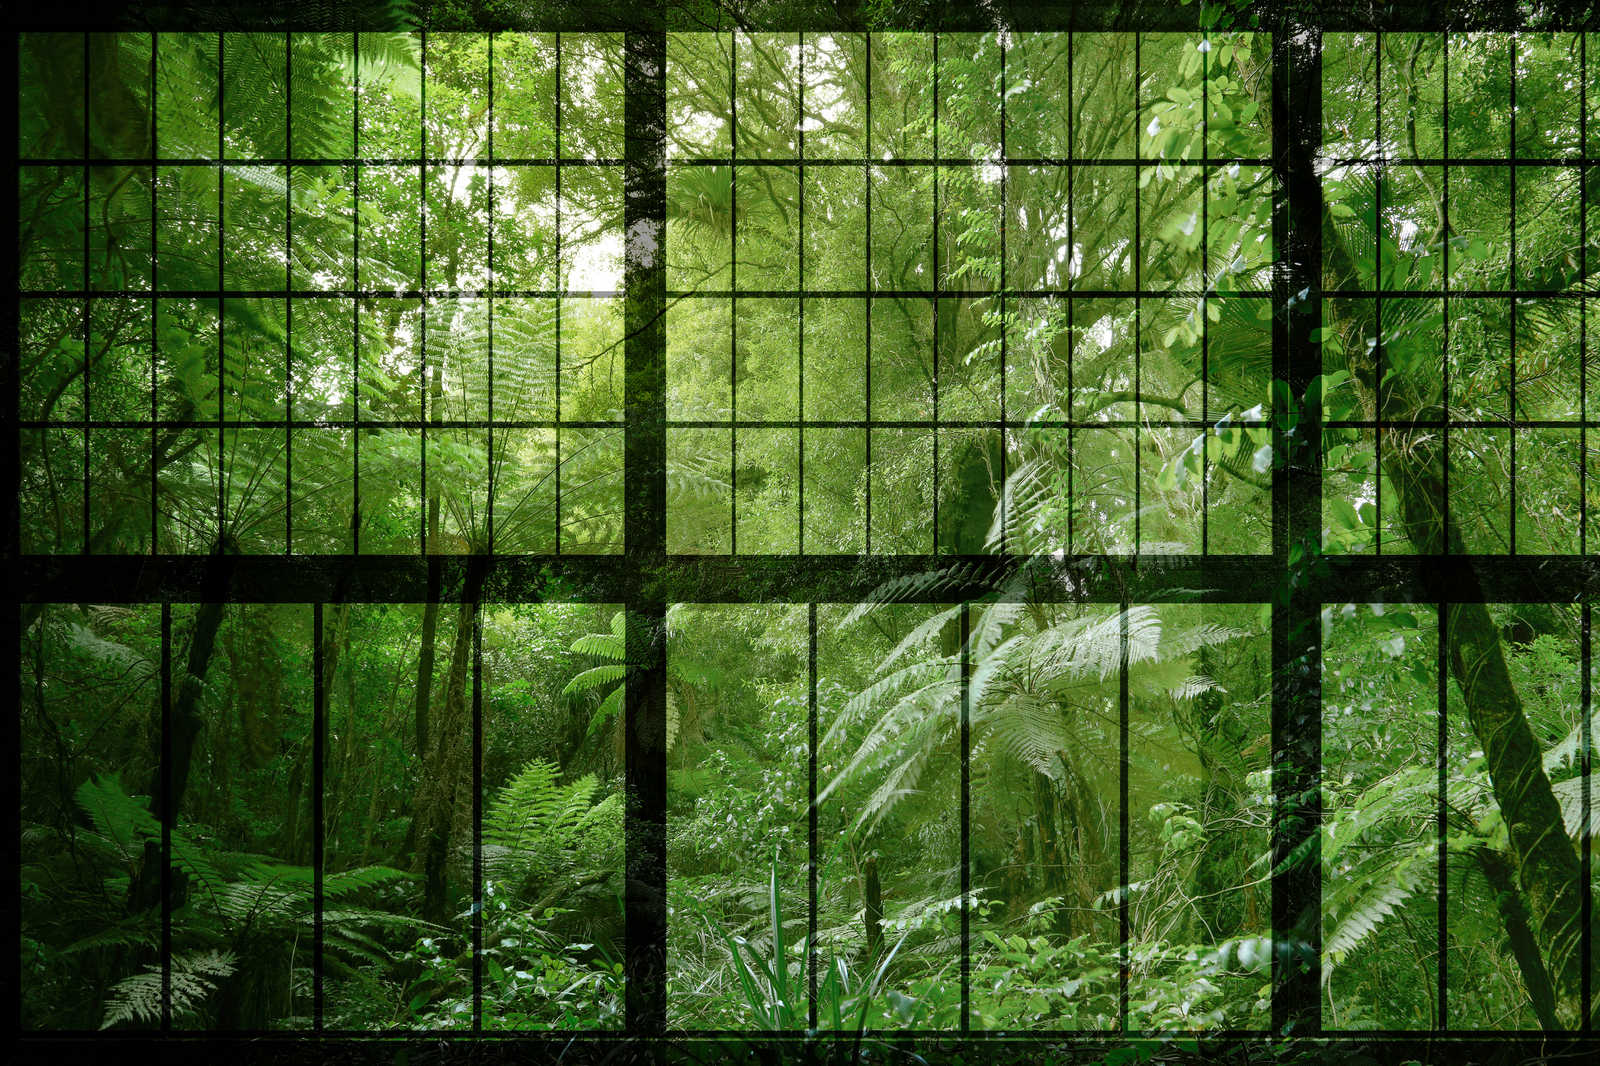             Rainforest 2 - Loft Window Canvas Painting with Jungle View - 1.20 m x 0.80 m
        